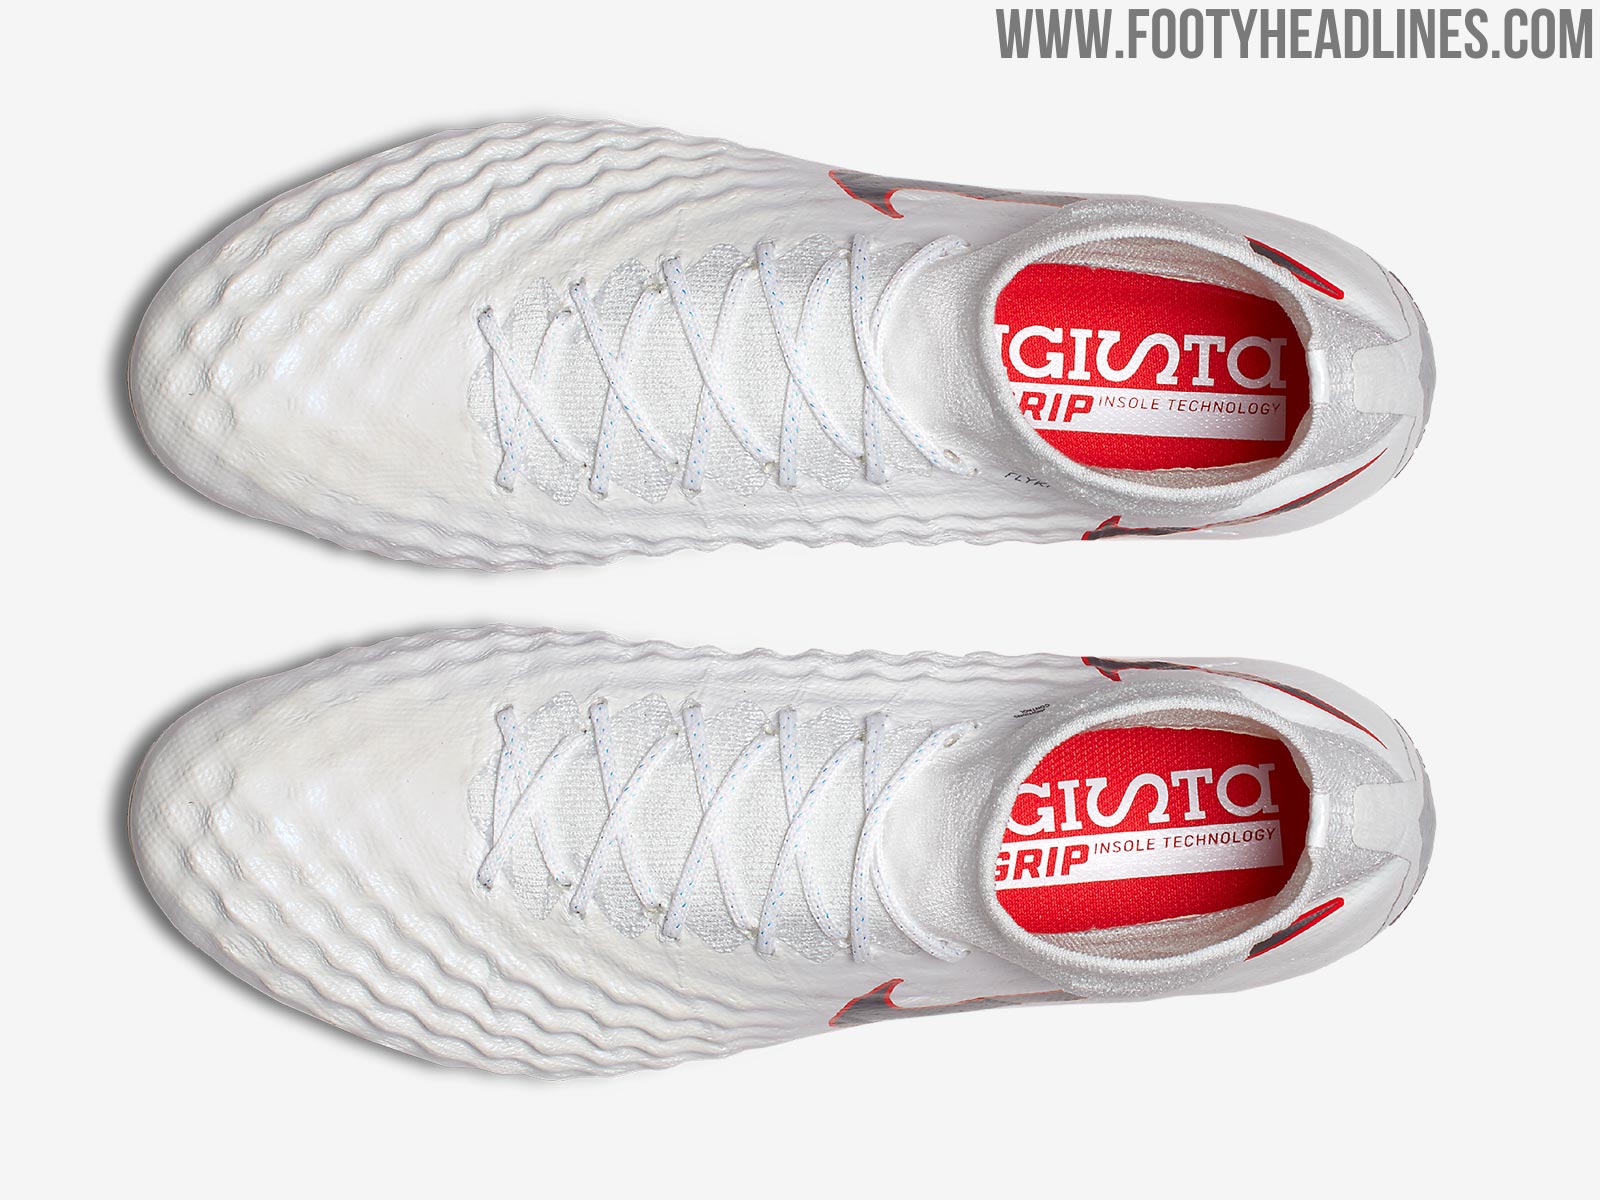 Stunning Nike Obra II 2018 World Cup Boots Revealed - Footy Headlines